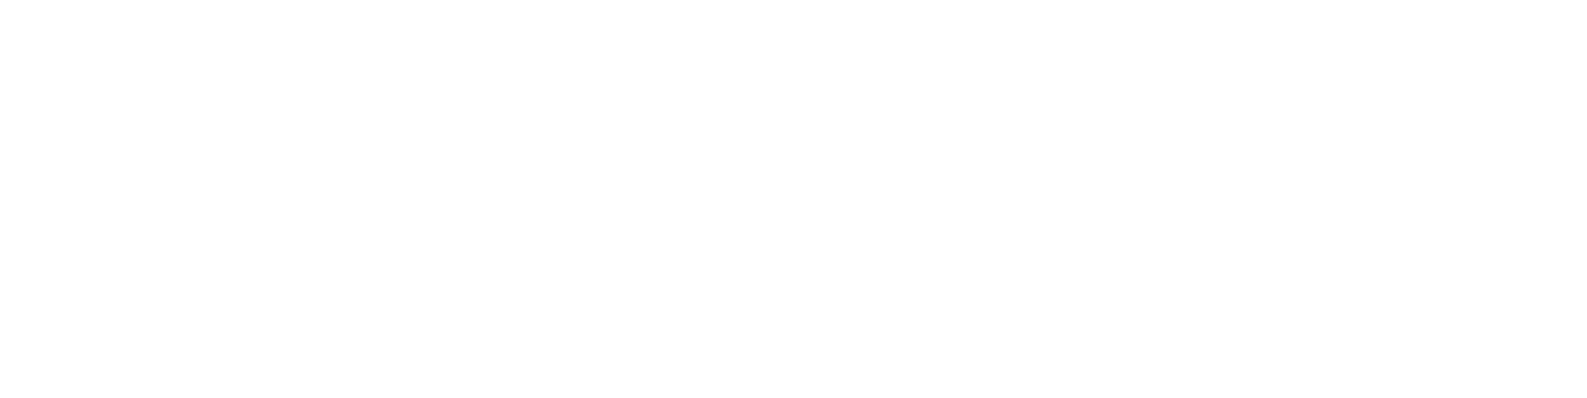 Hollo-Real-Estate-hrz-FIU-bw-rev